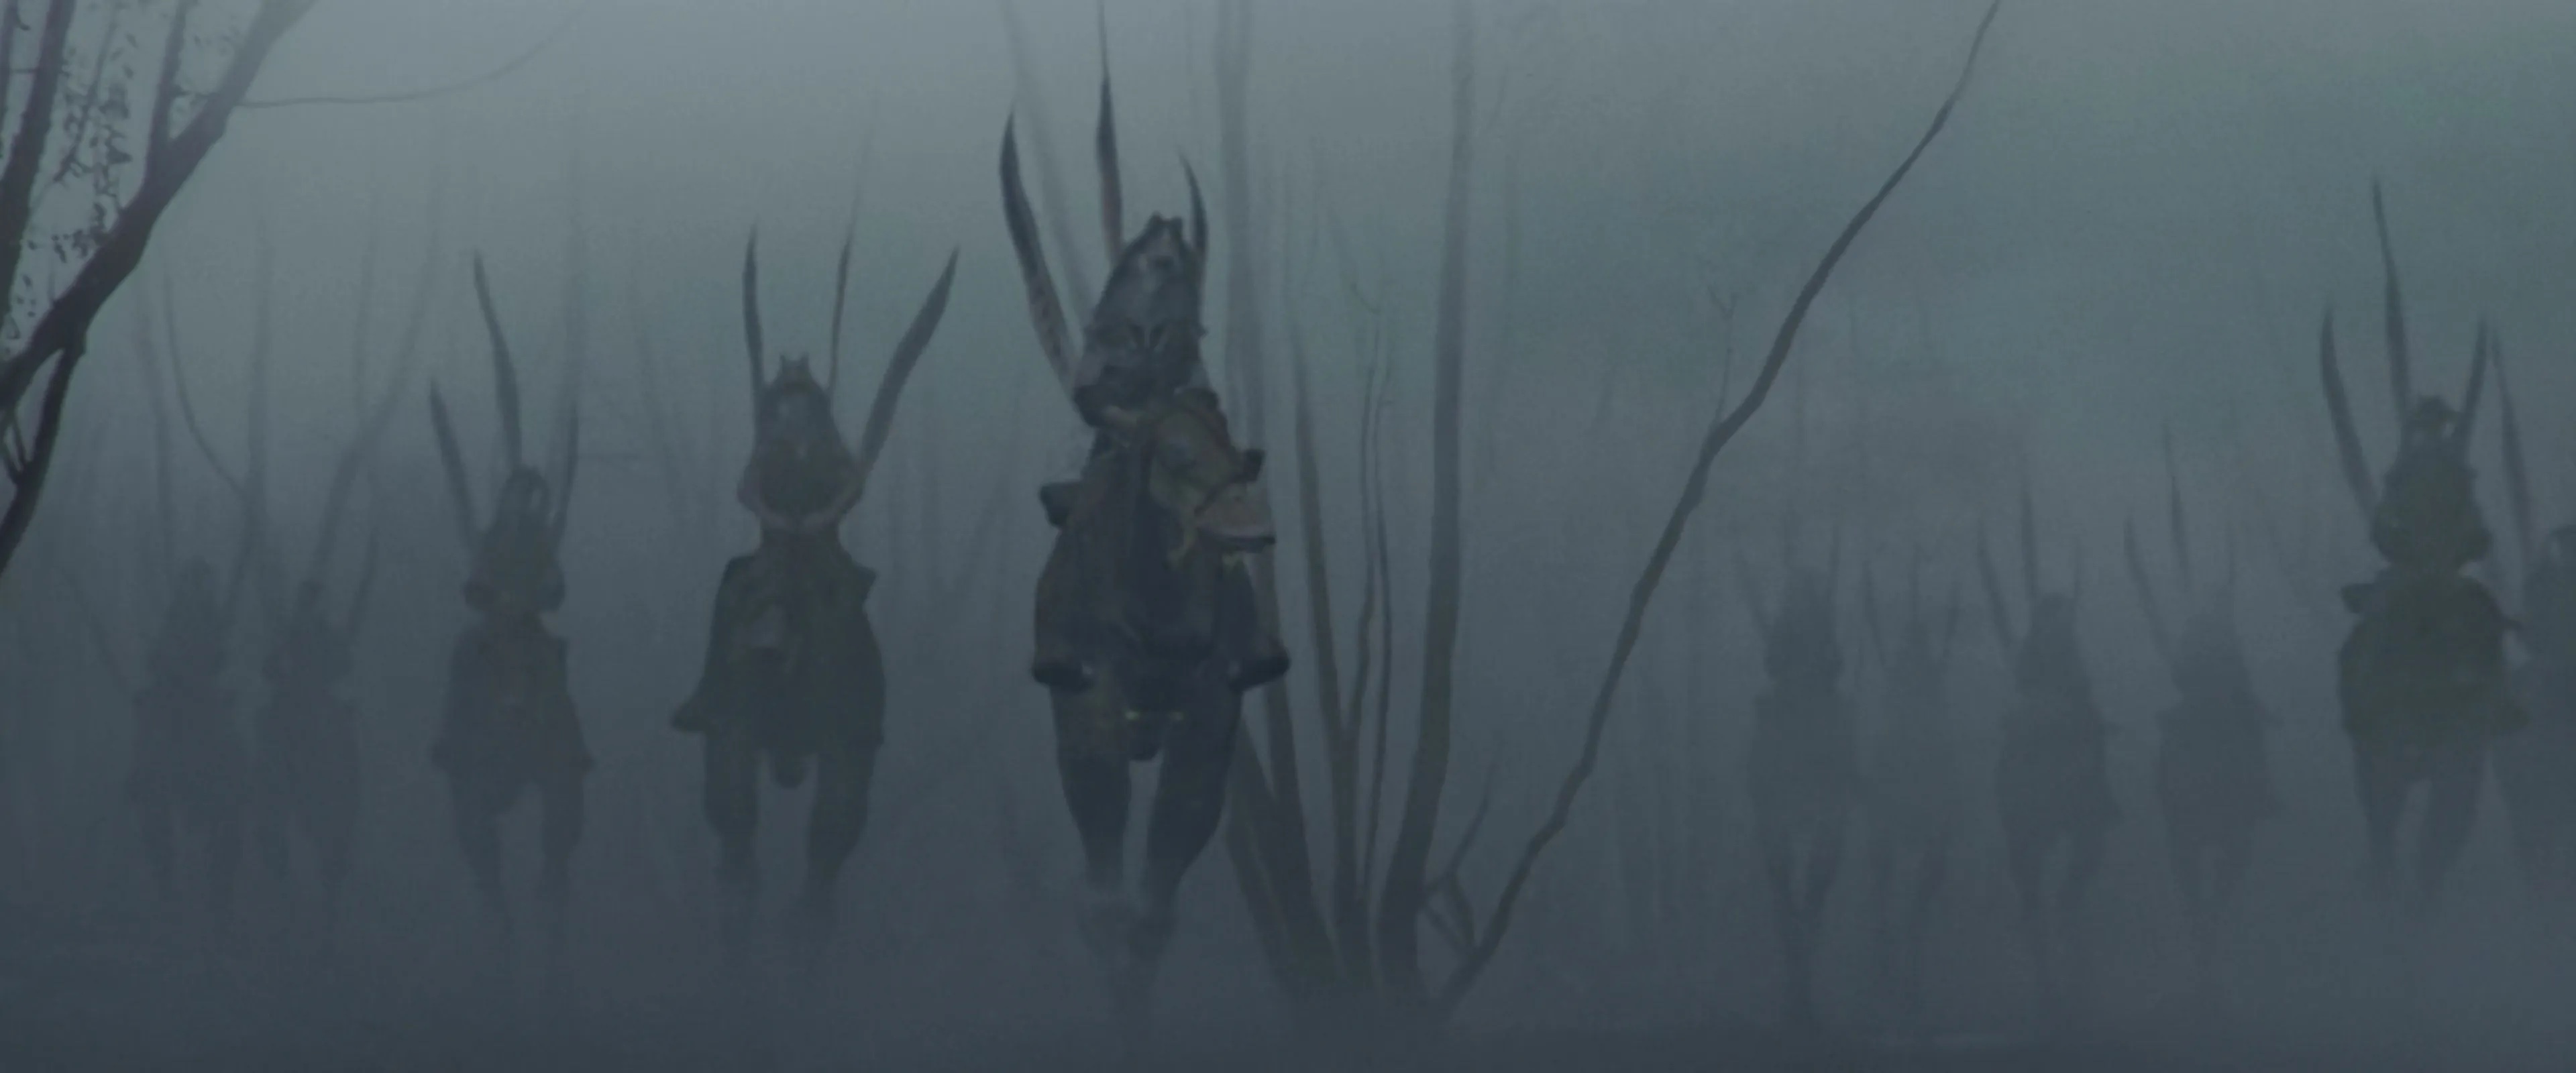 Gungans walk on bipedal beasts through the fogs of Naboo in The Phantom Menace